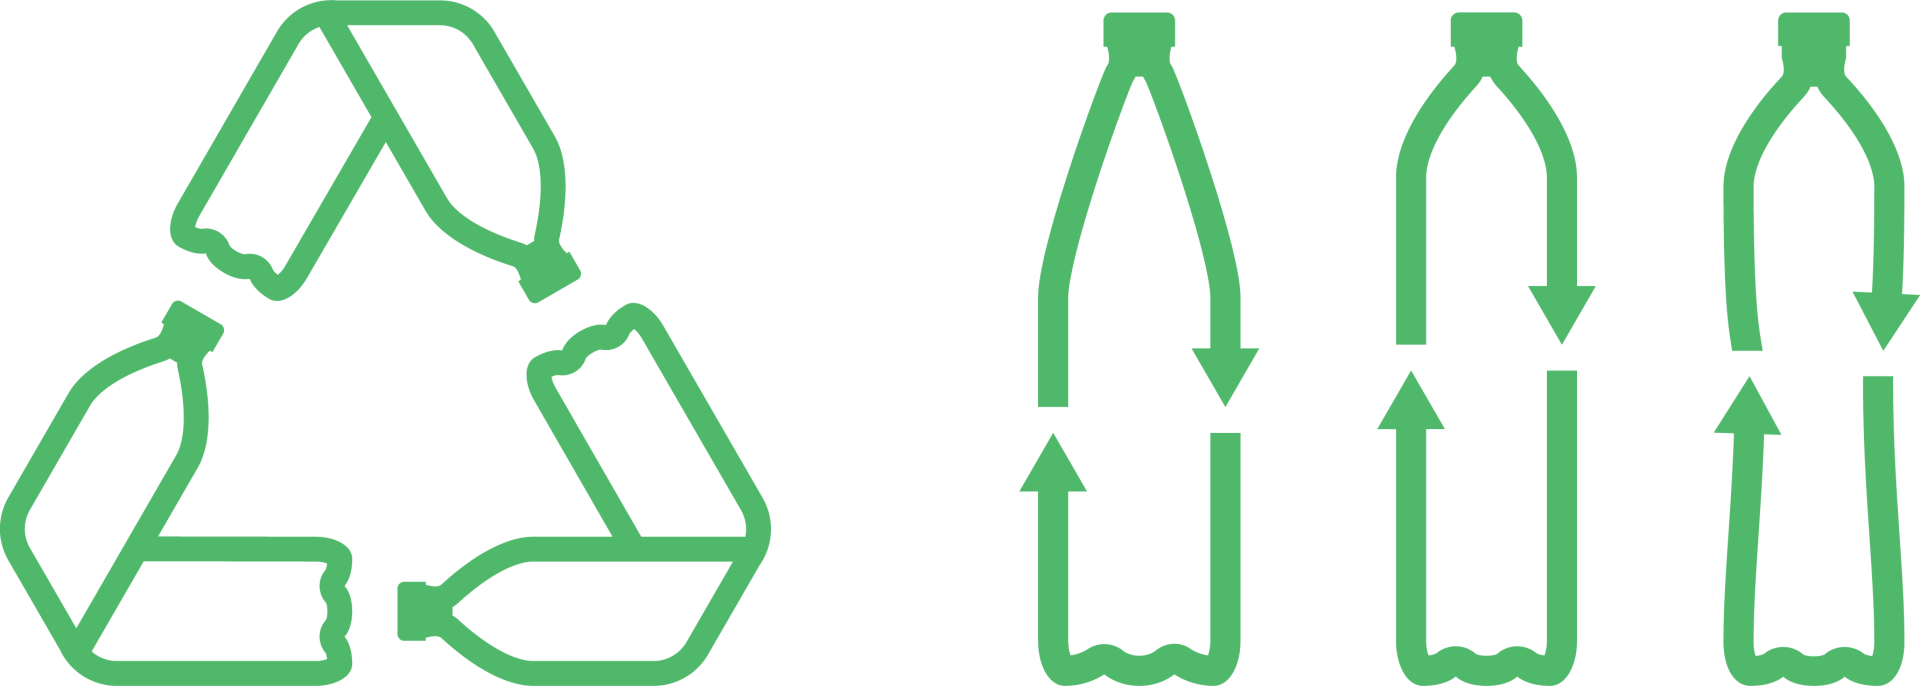 Recycled bottle logo.